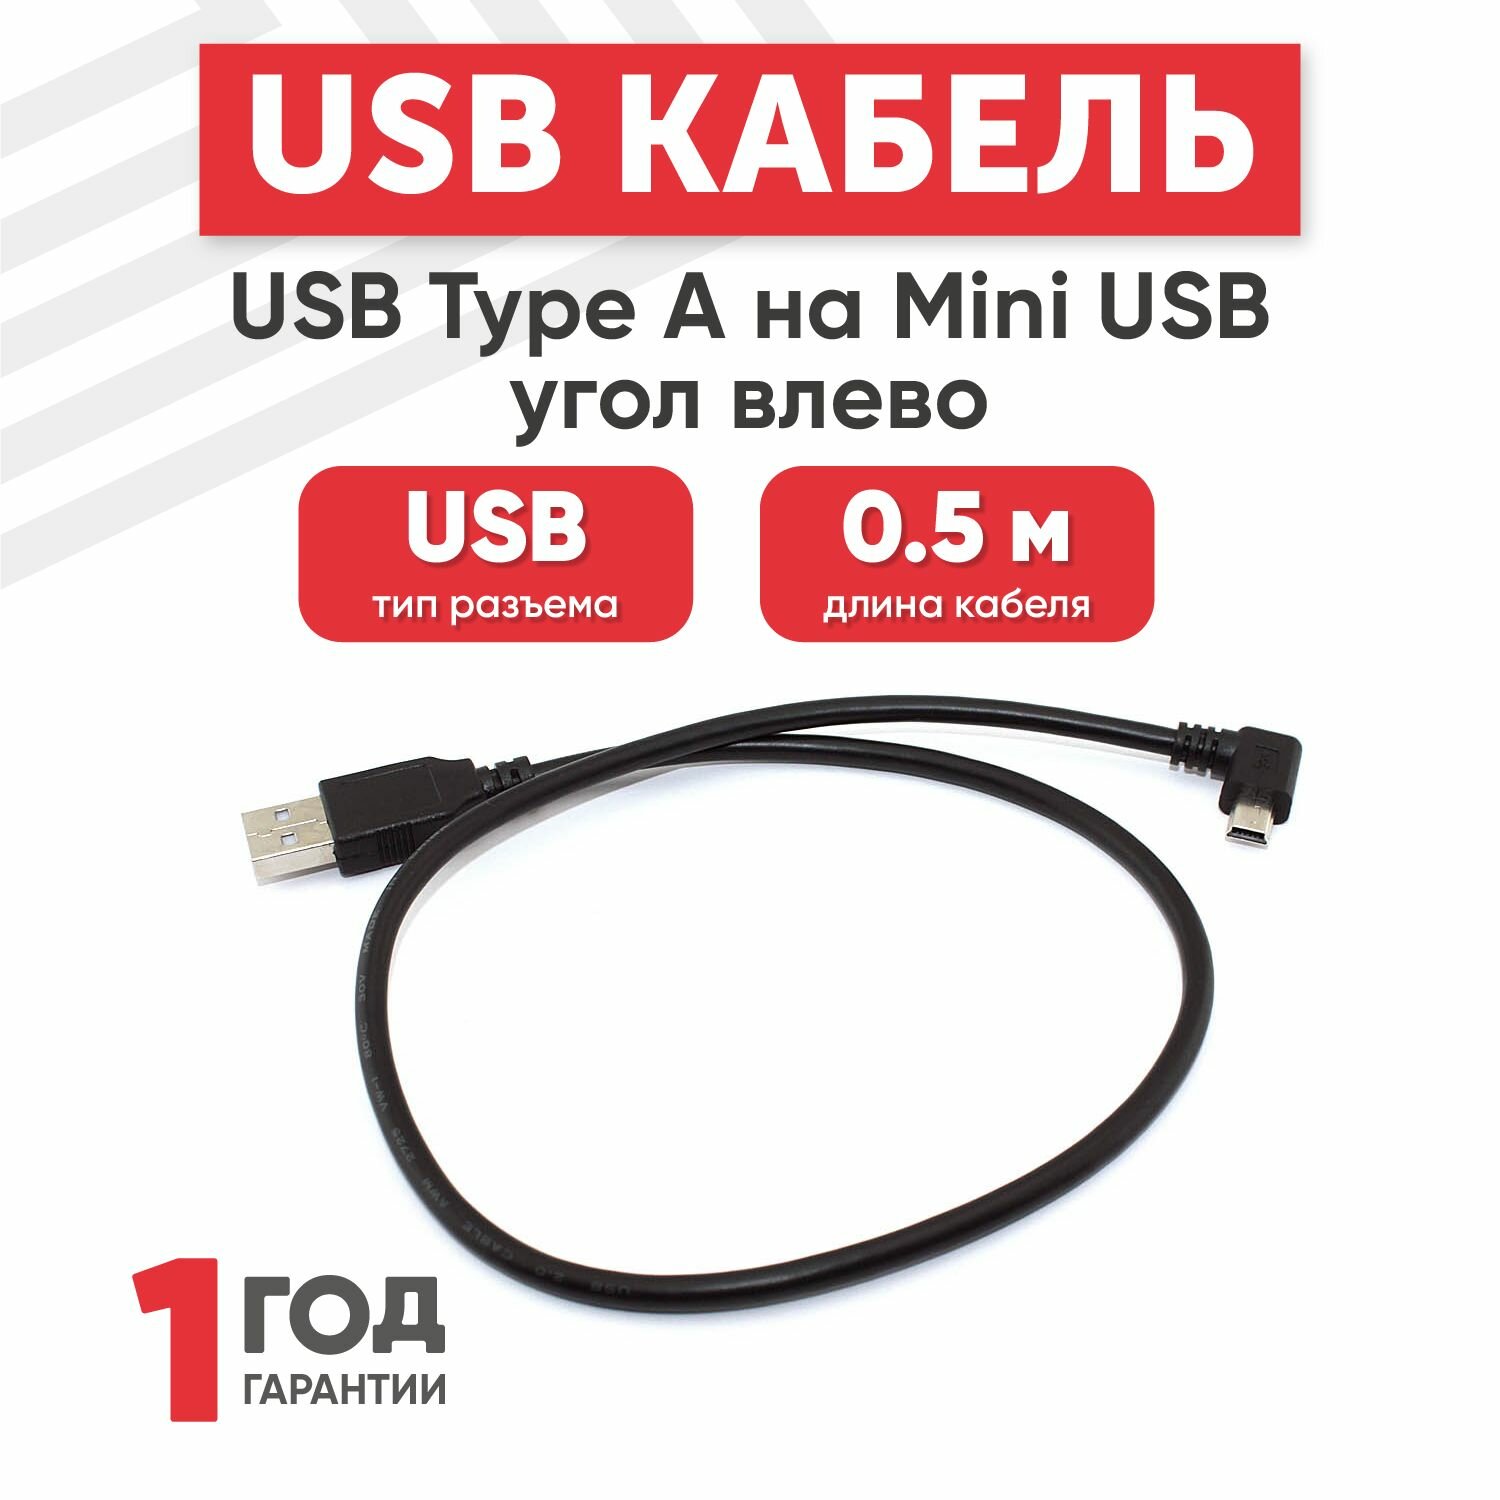 Кабель USB Type-A на MiniUSB угол влево, длина 0.5 метра